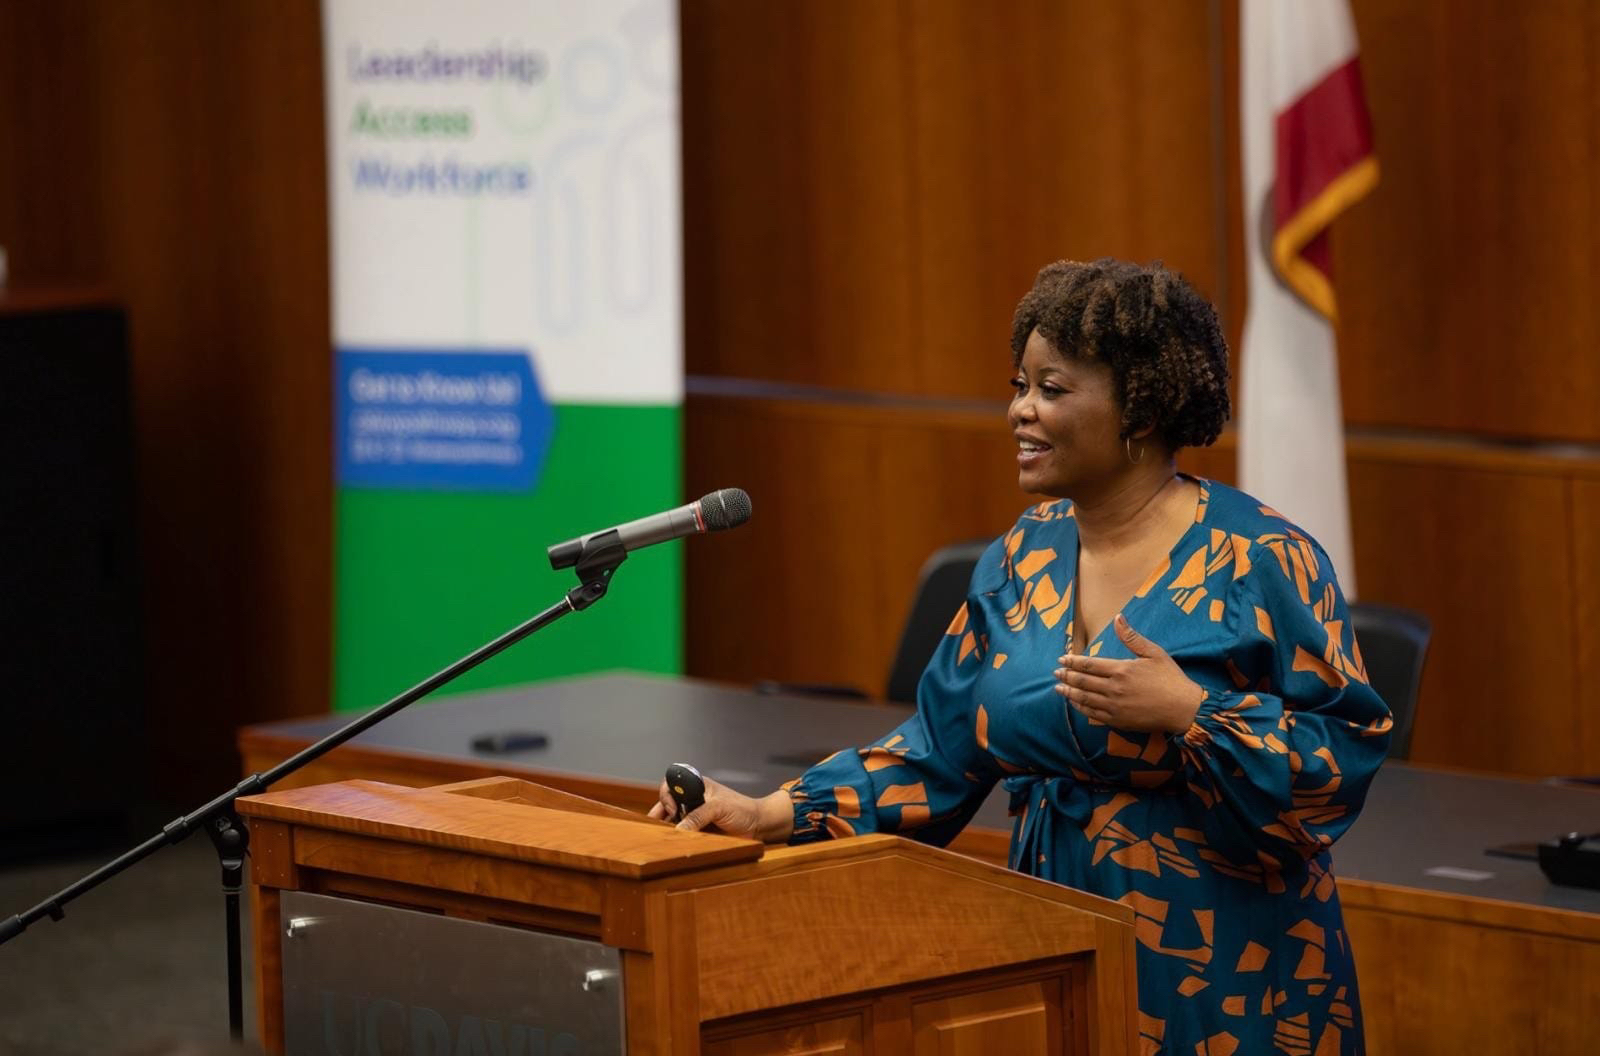 Professor Irene Oritseweyinmi Joe speaking at the podium at King Hall.